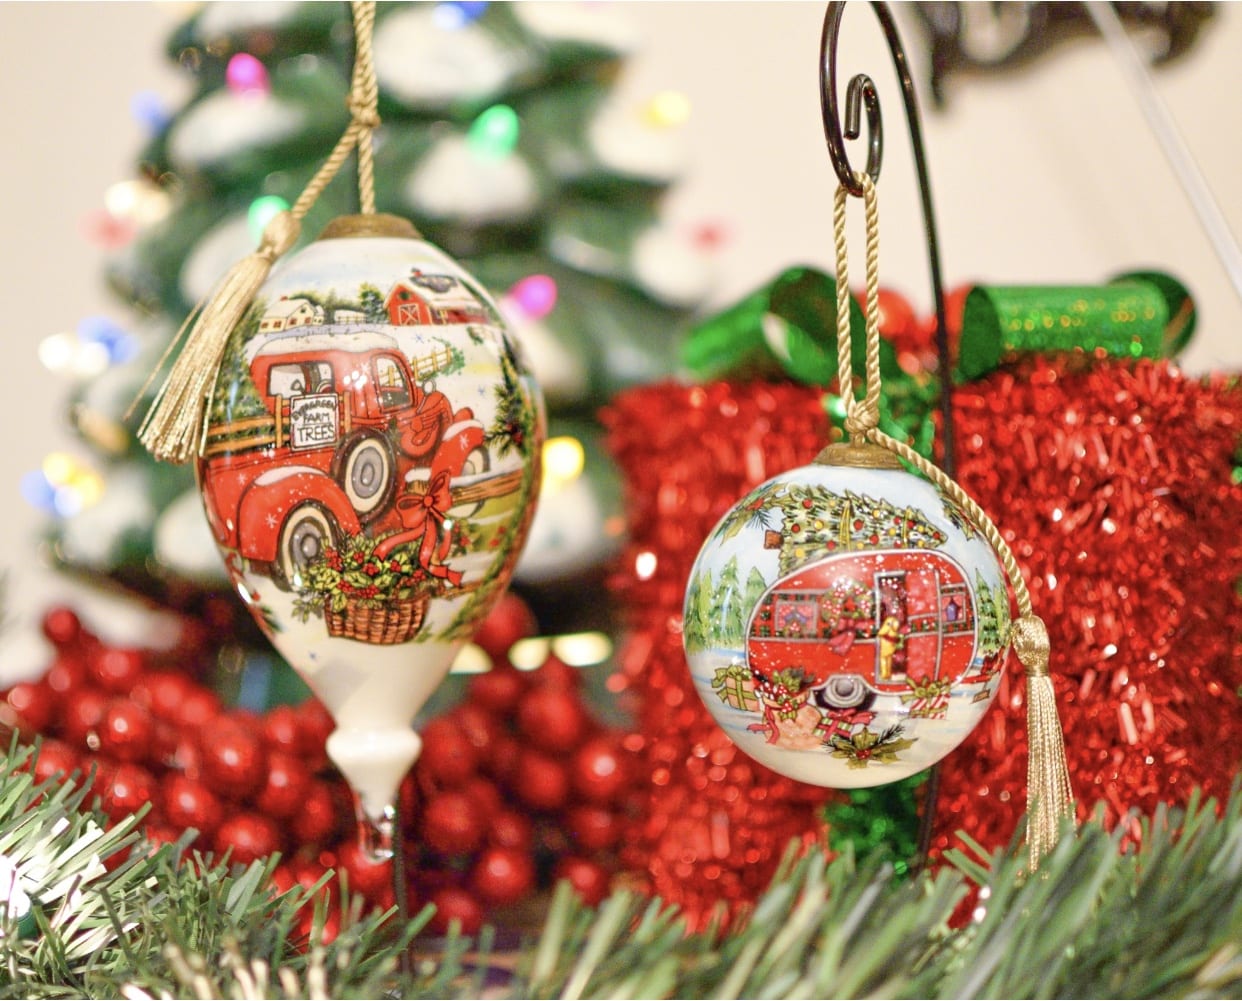 Unique Personalized Christmas Ornaments!